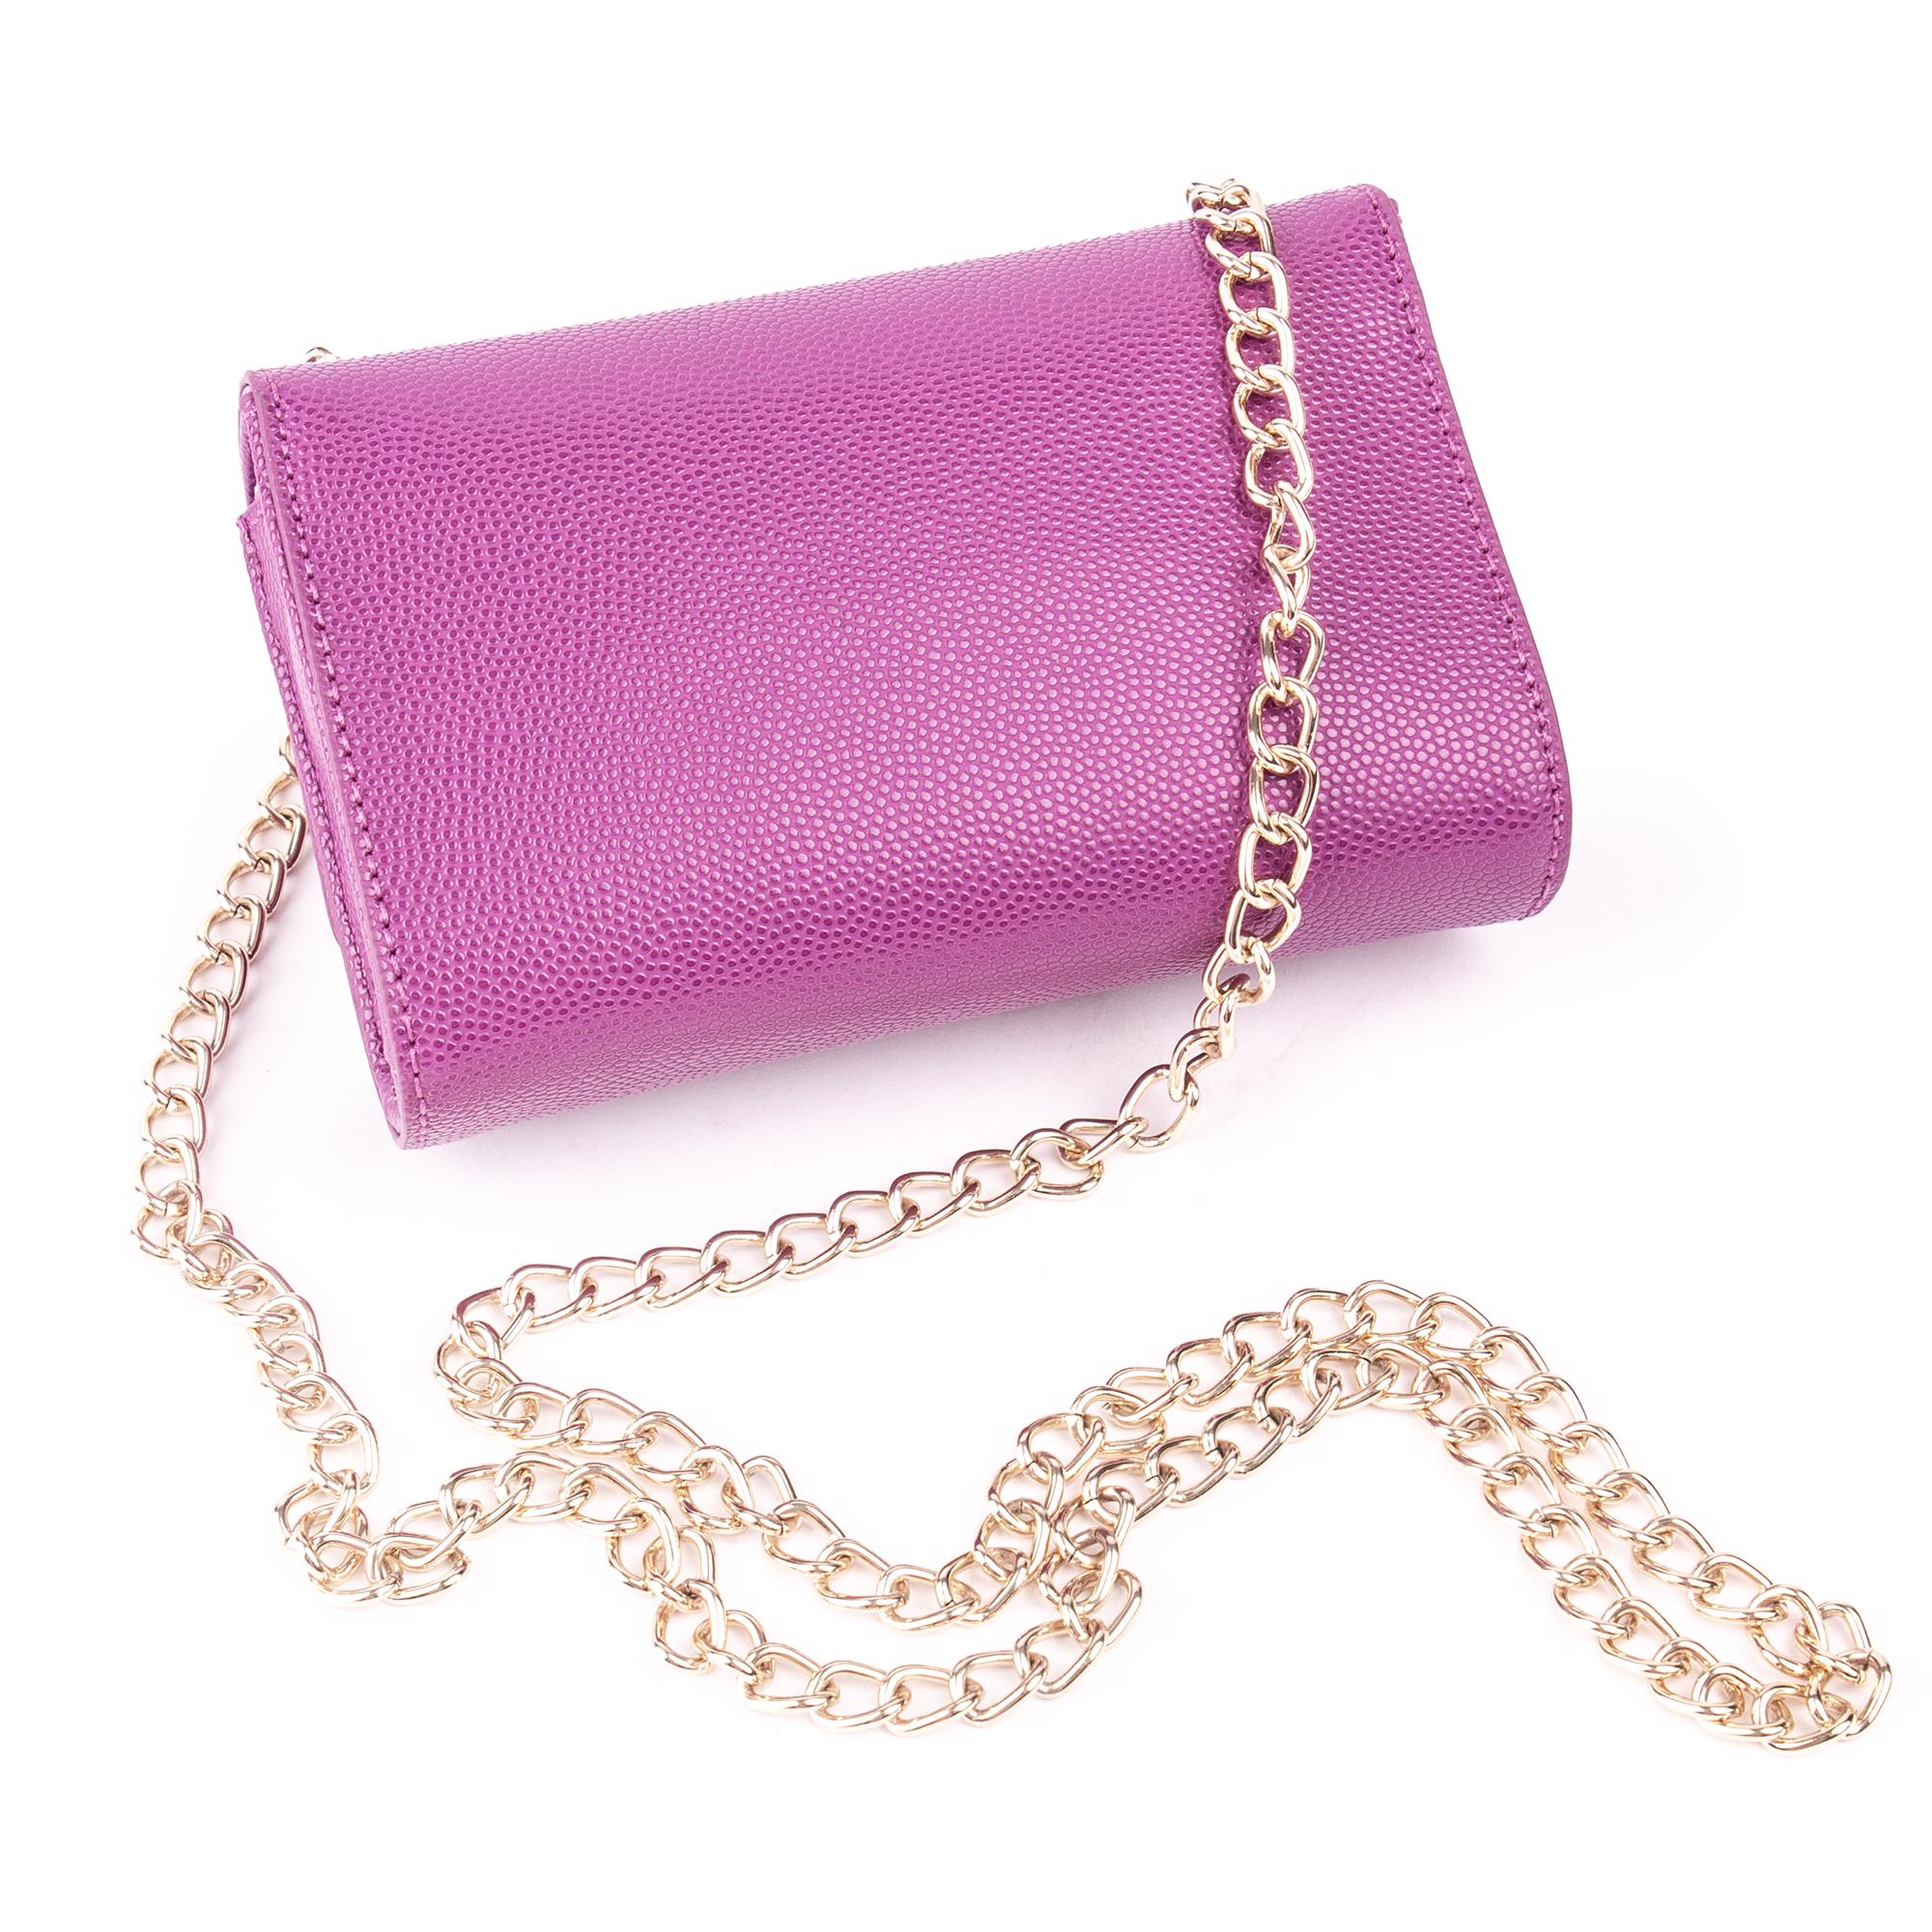 Valentino Womens Divina Handbag - Pink